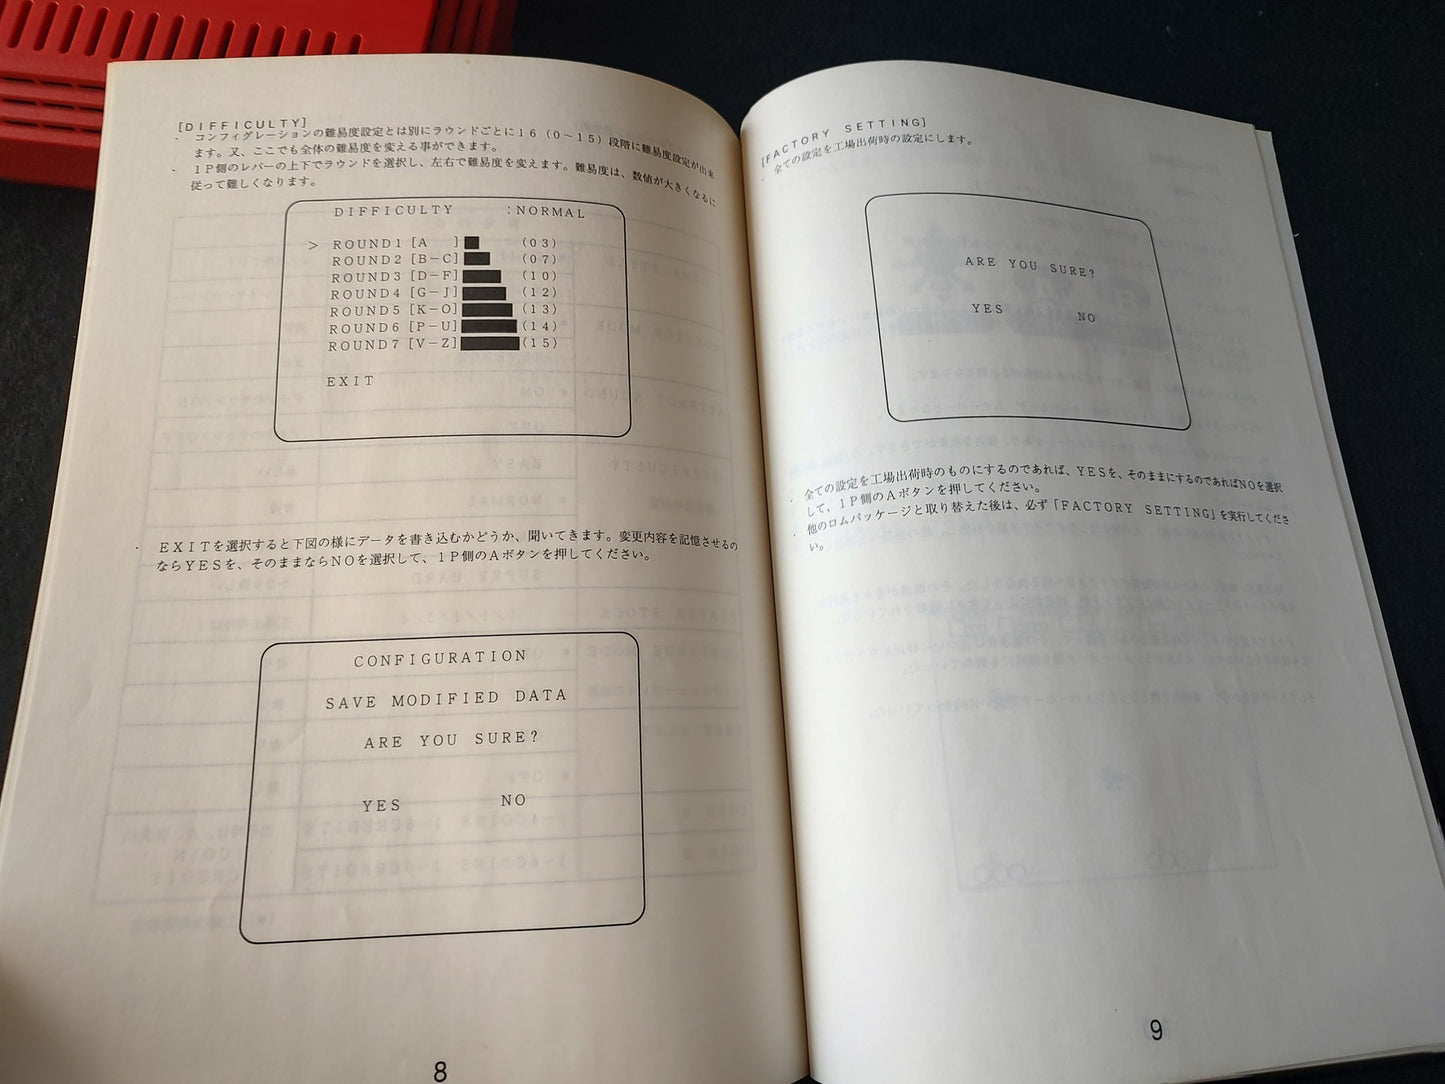 DARIUS Gaiden Taito Taito F3 Package System, Cartridge, Manuals, Working-g0323-